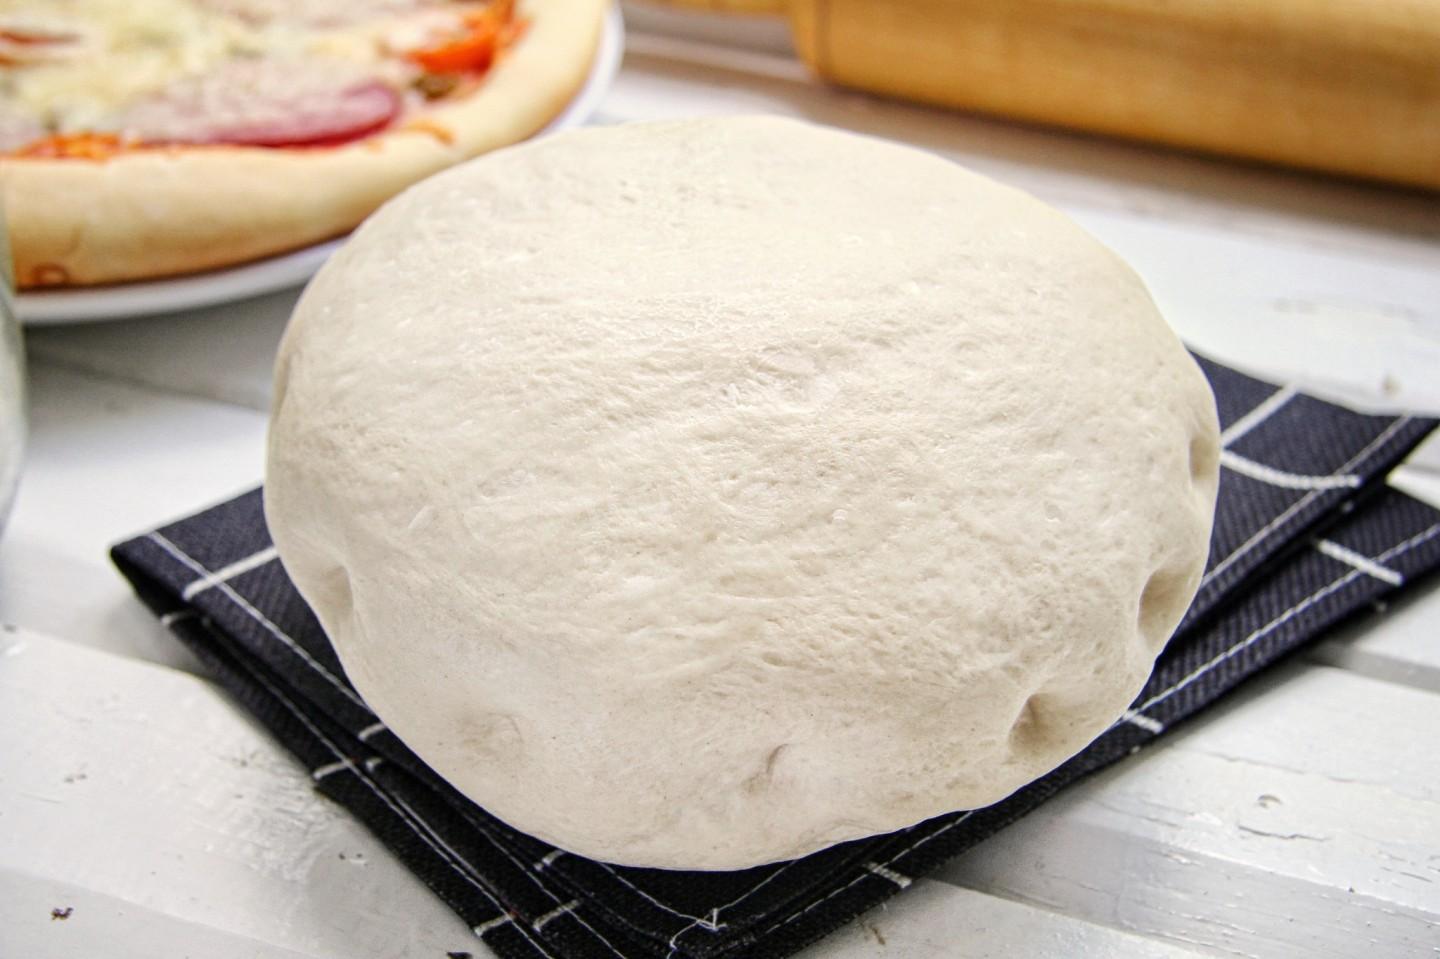 хрустящее тесто для пиццы дрожжевое тесто фото 54